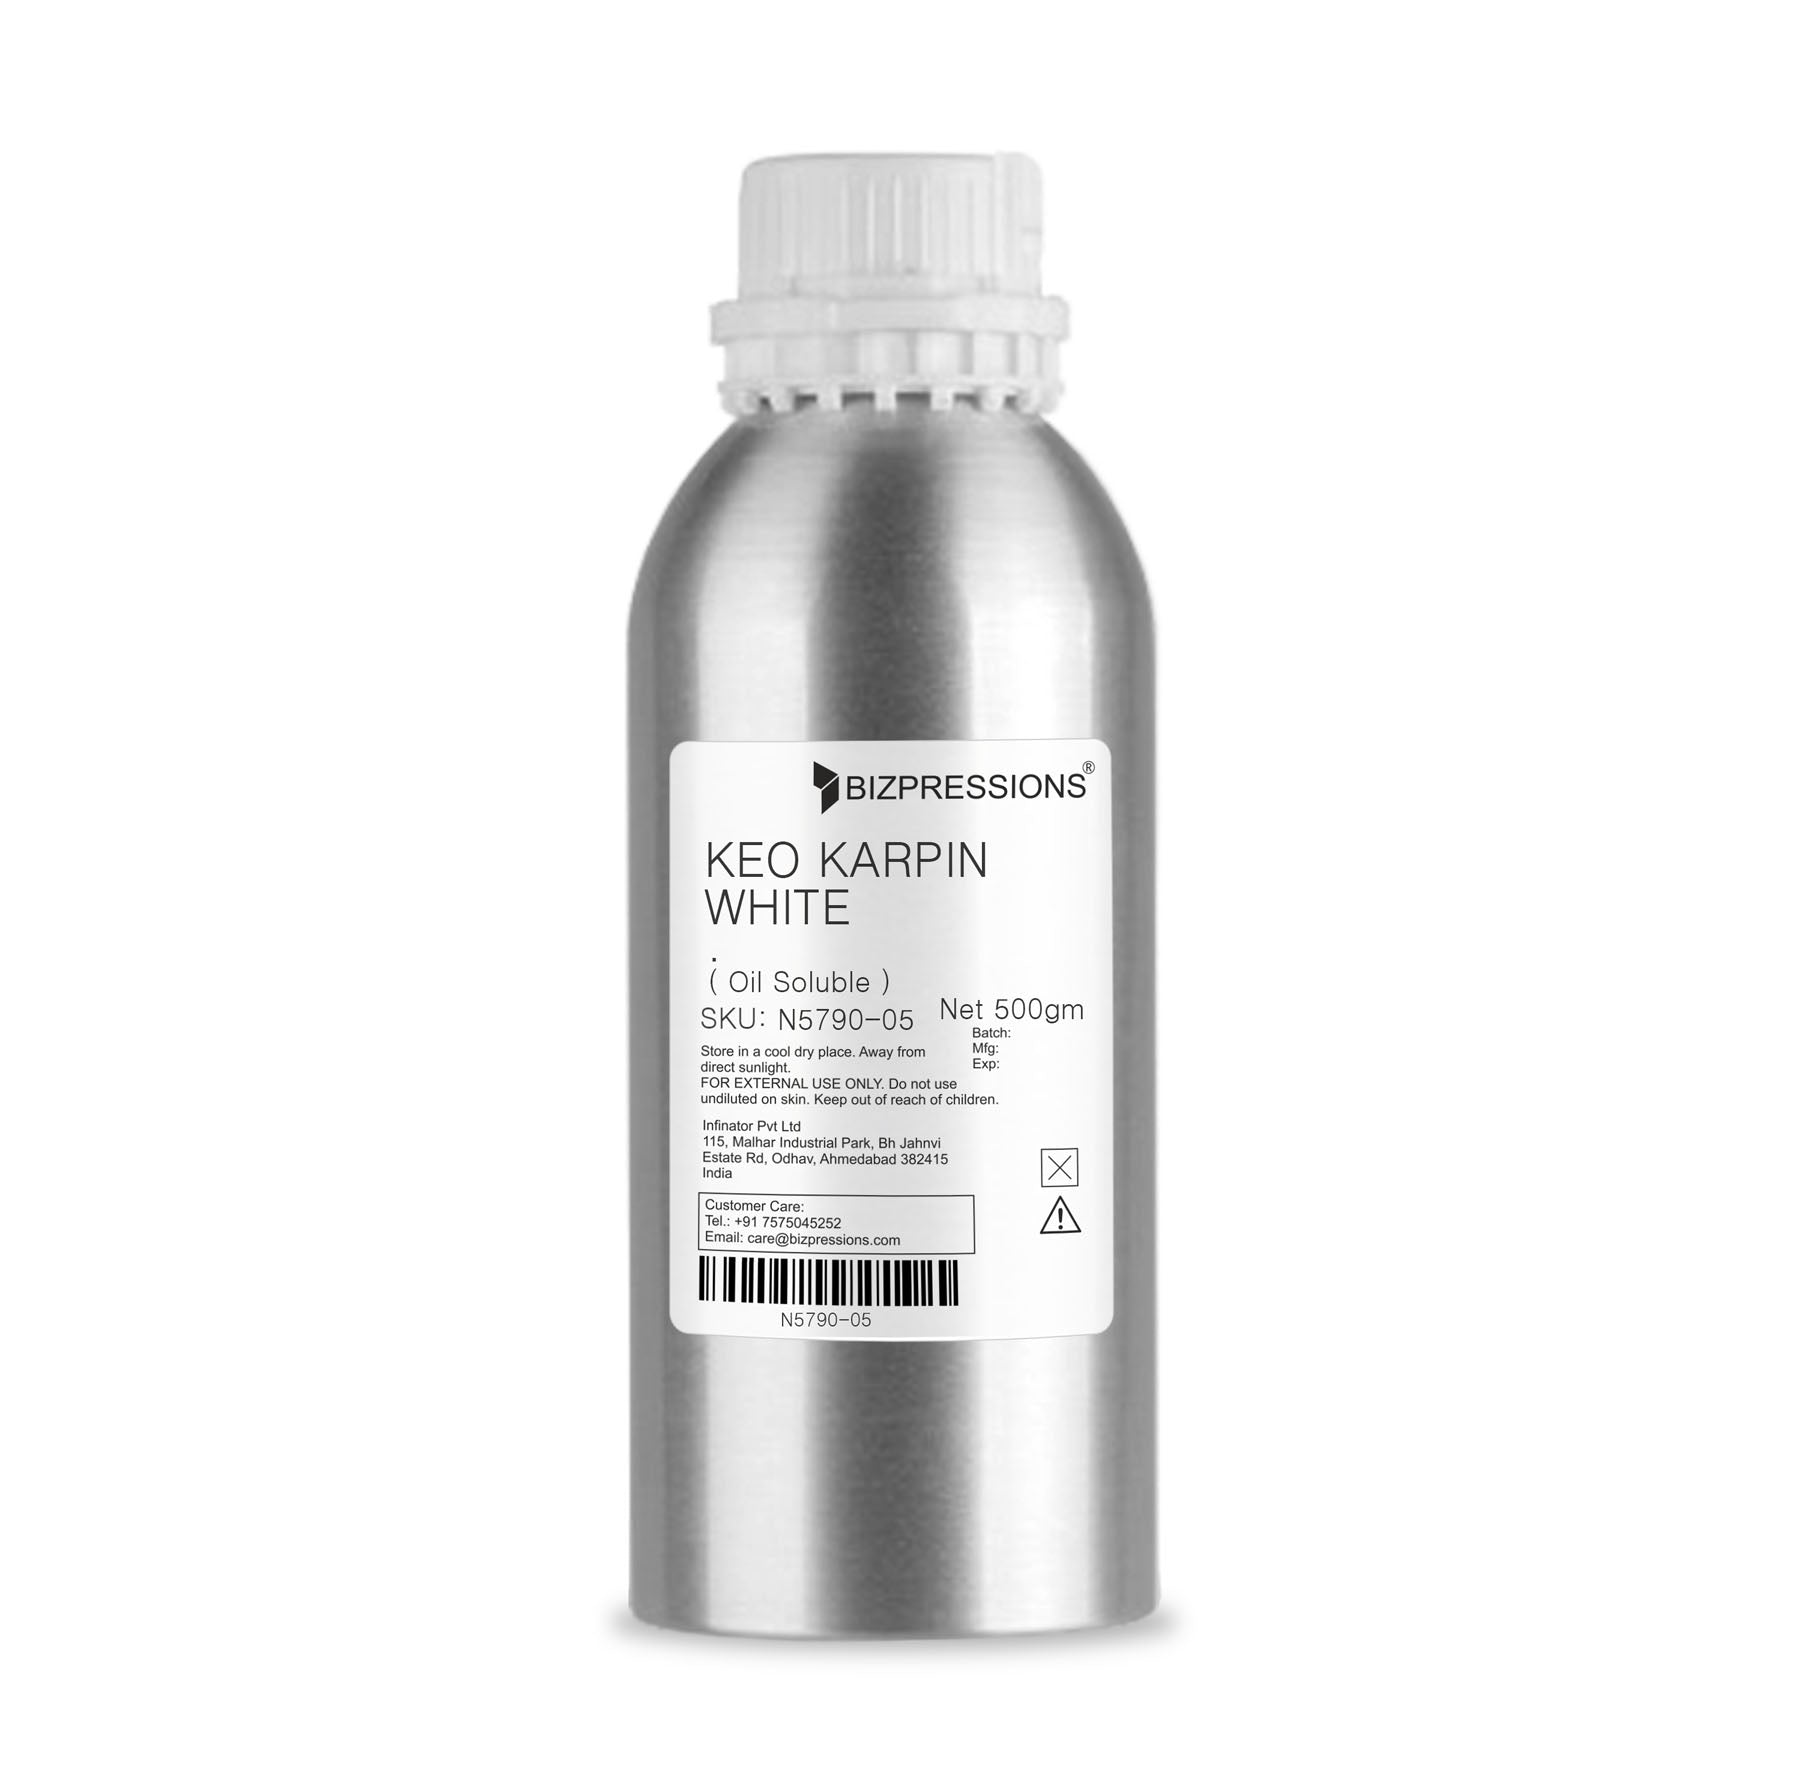 KEO KARPIN WHITE - Fragrance ( Oil Soluble ) - 500 gm